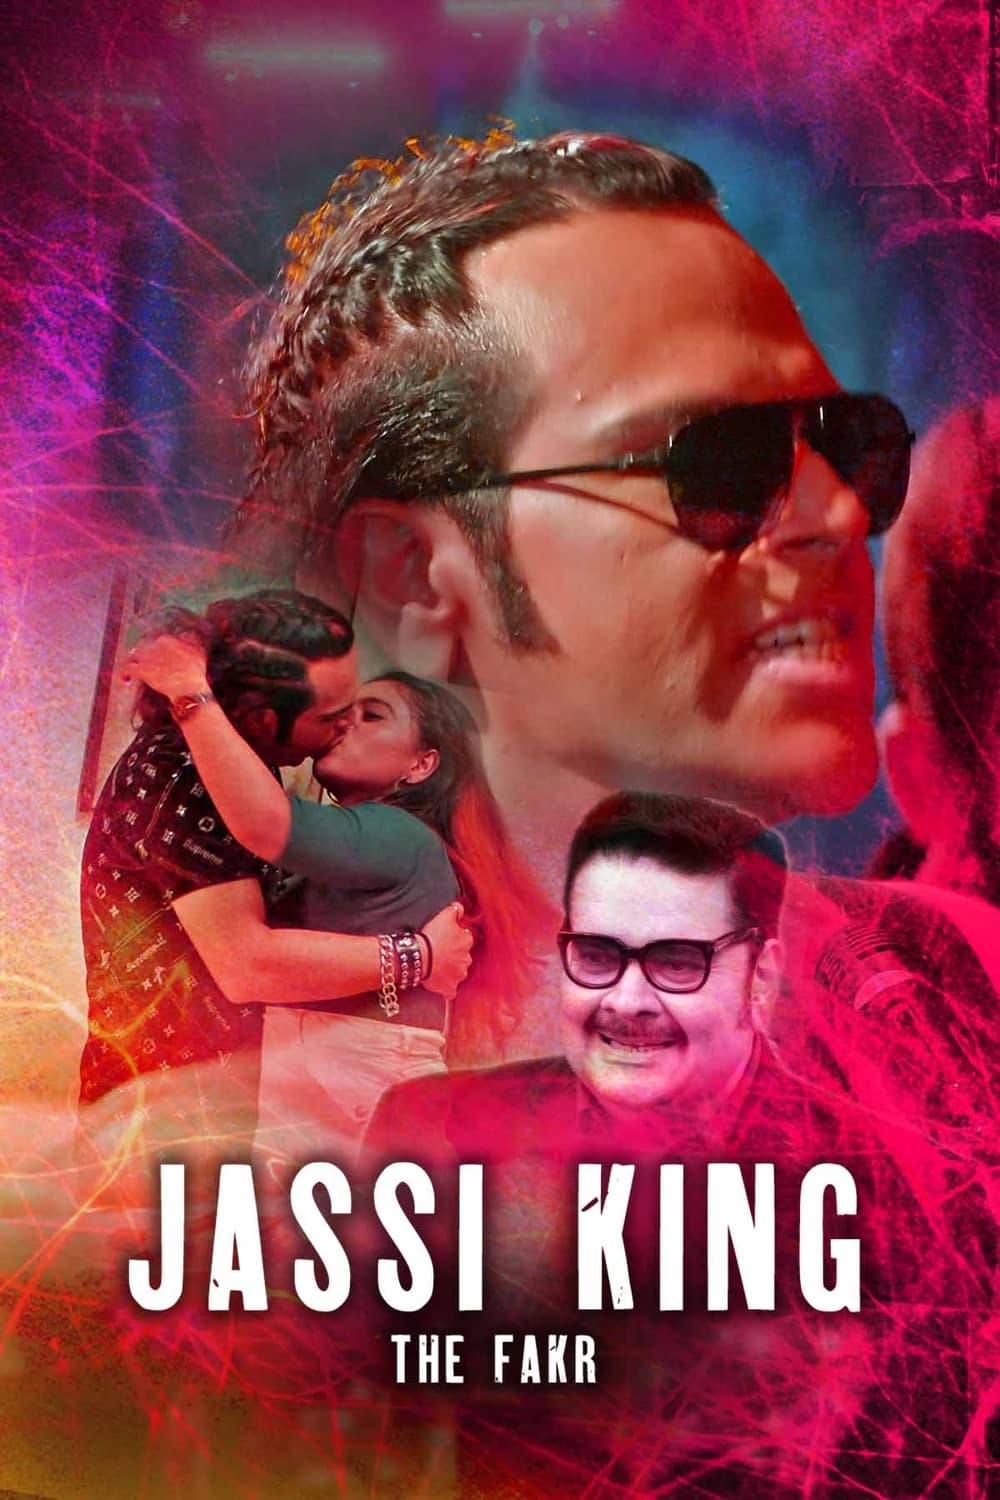 Jassi King The Fakr (2020) Season 1 Kooku Originals (2020)